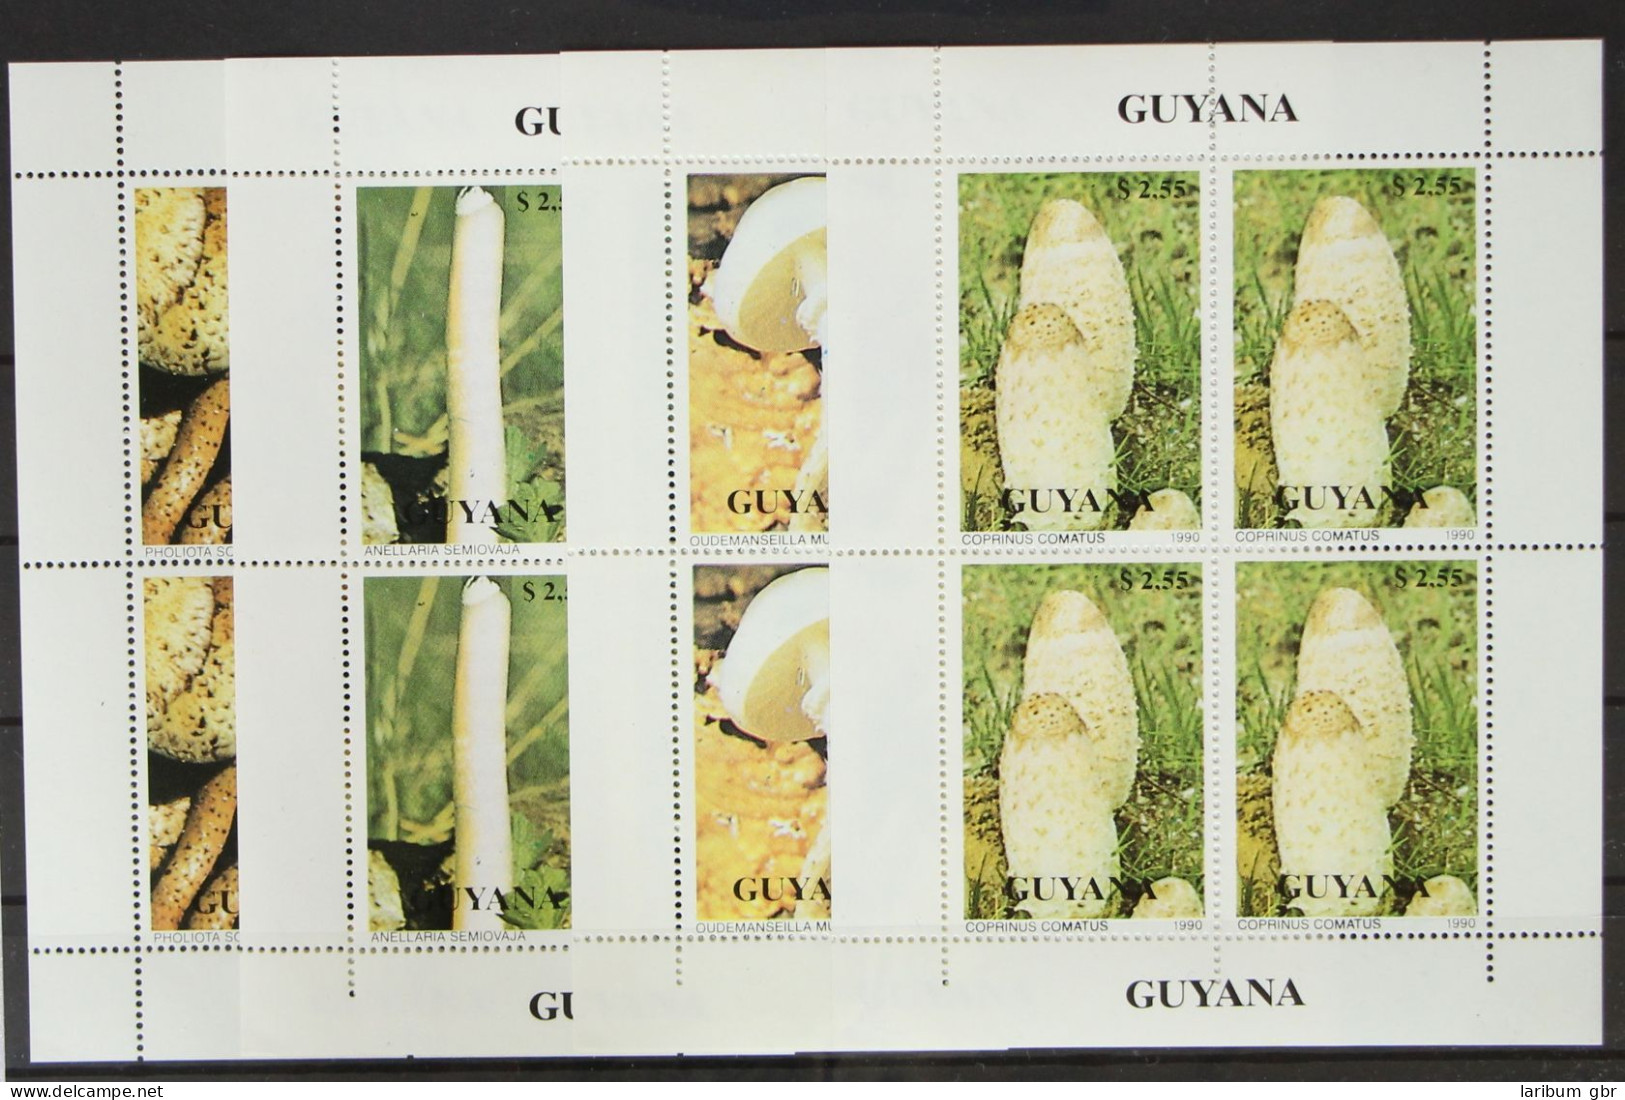 Guyana 3287-3290 Postfrisch Kleinbogensatz / Pilze #GH160 - Guyana (1966-...)